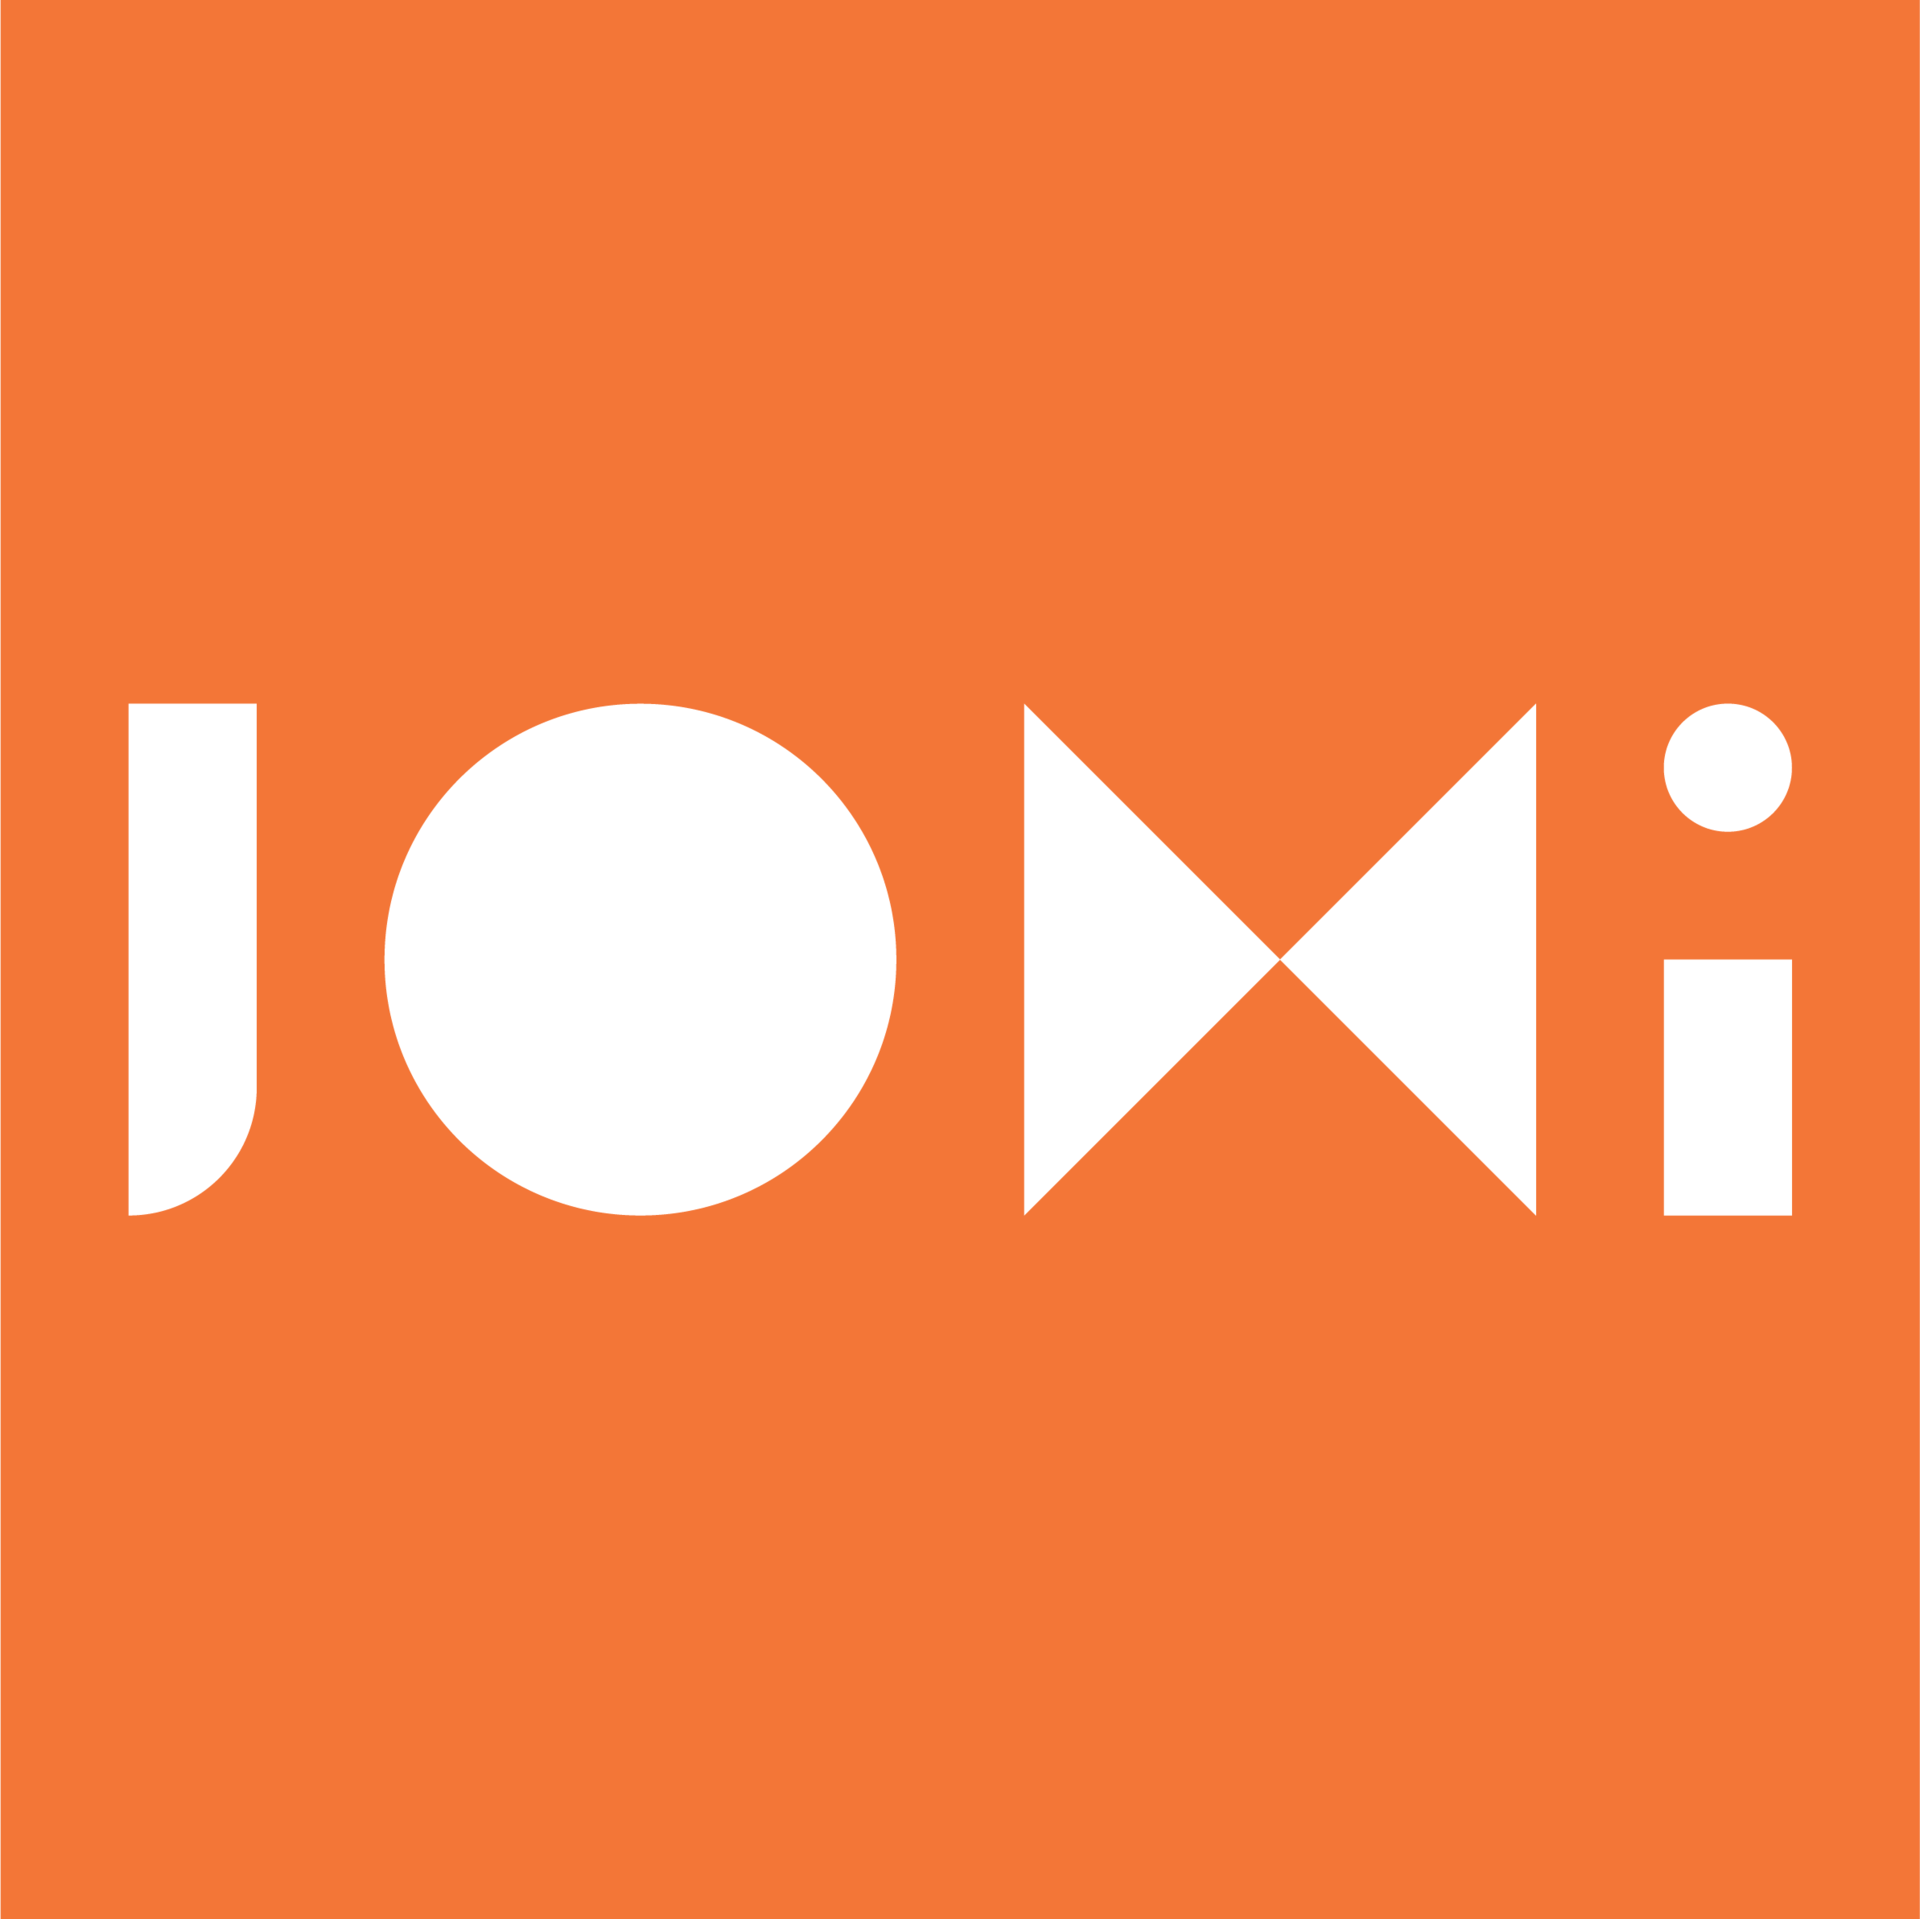 Logo, orange square with JOMi in white letters. 